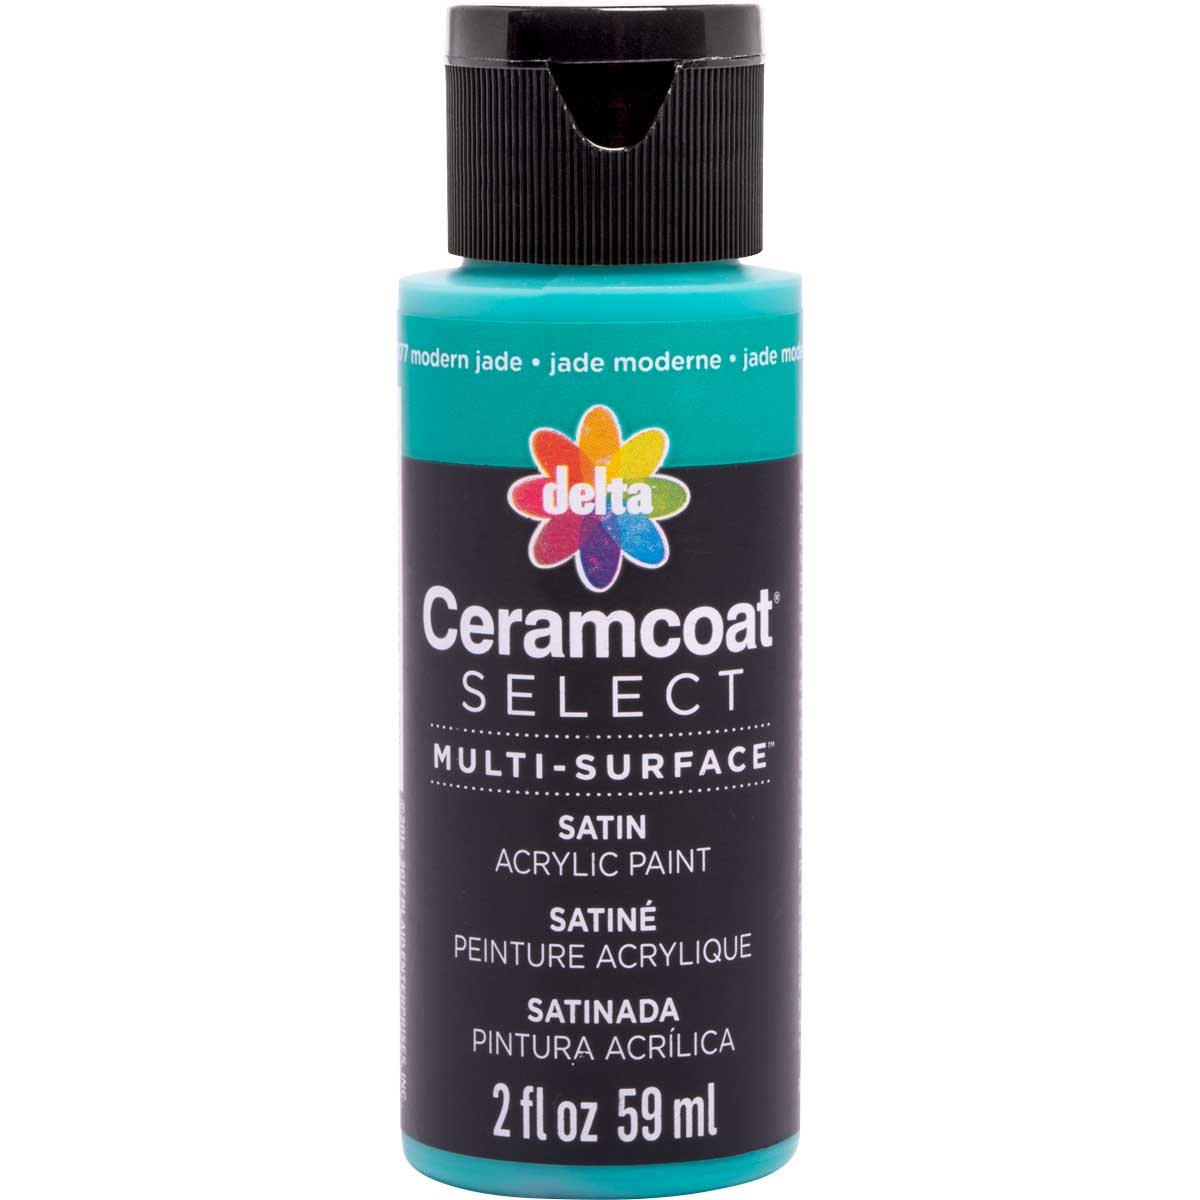 Delta Ceramcoat ® Select Multi-Surface Acrylic Paint - Satin - Modern Jade, 2 oz. - 04077